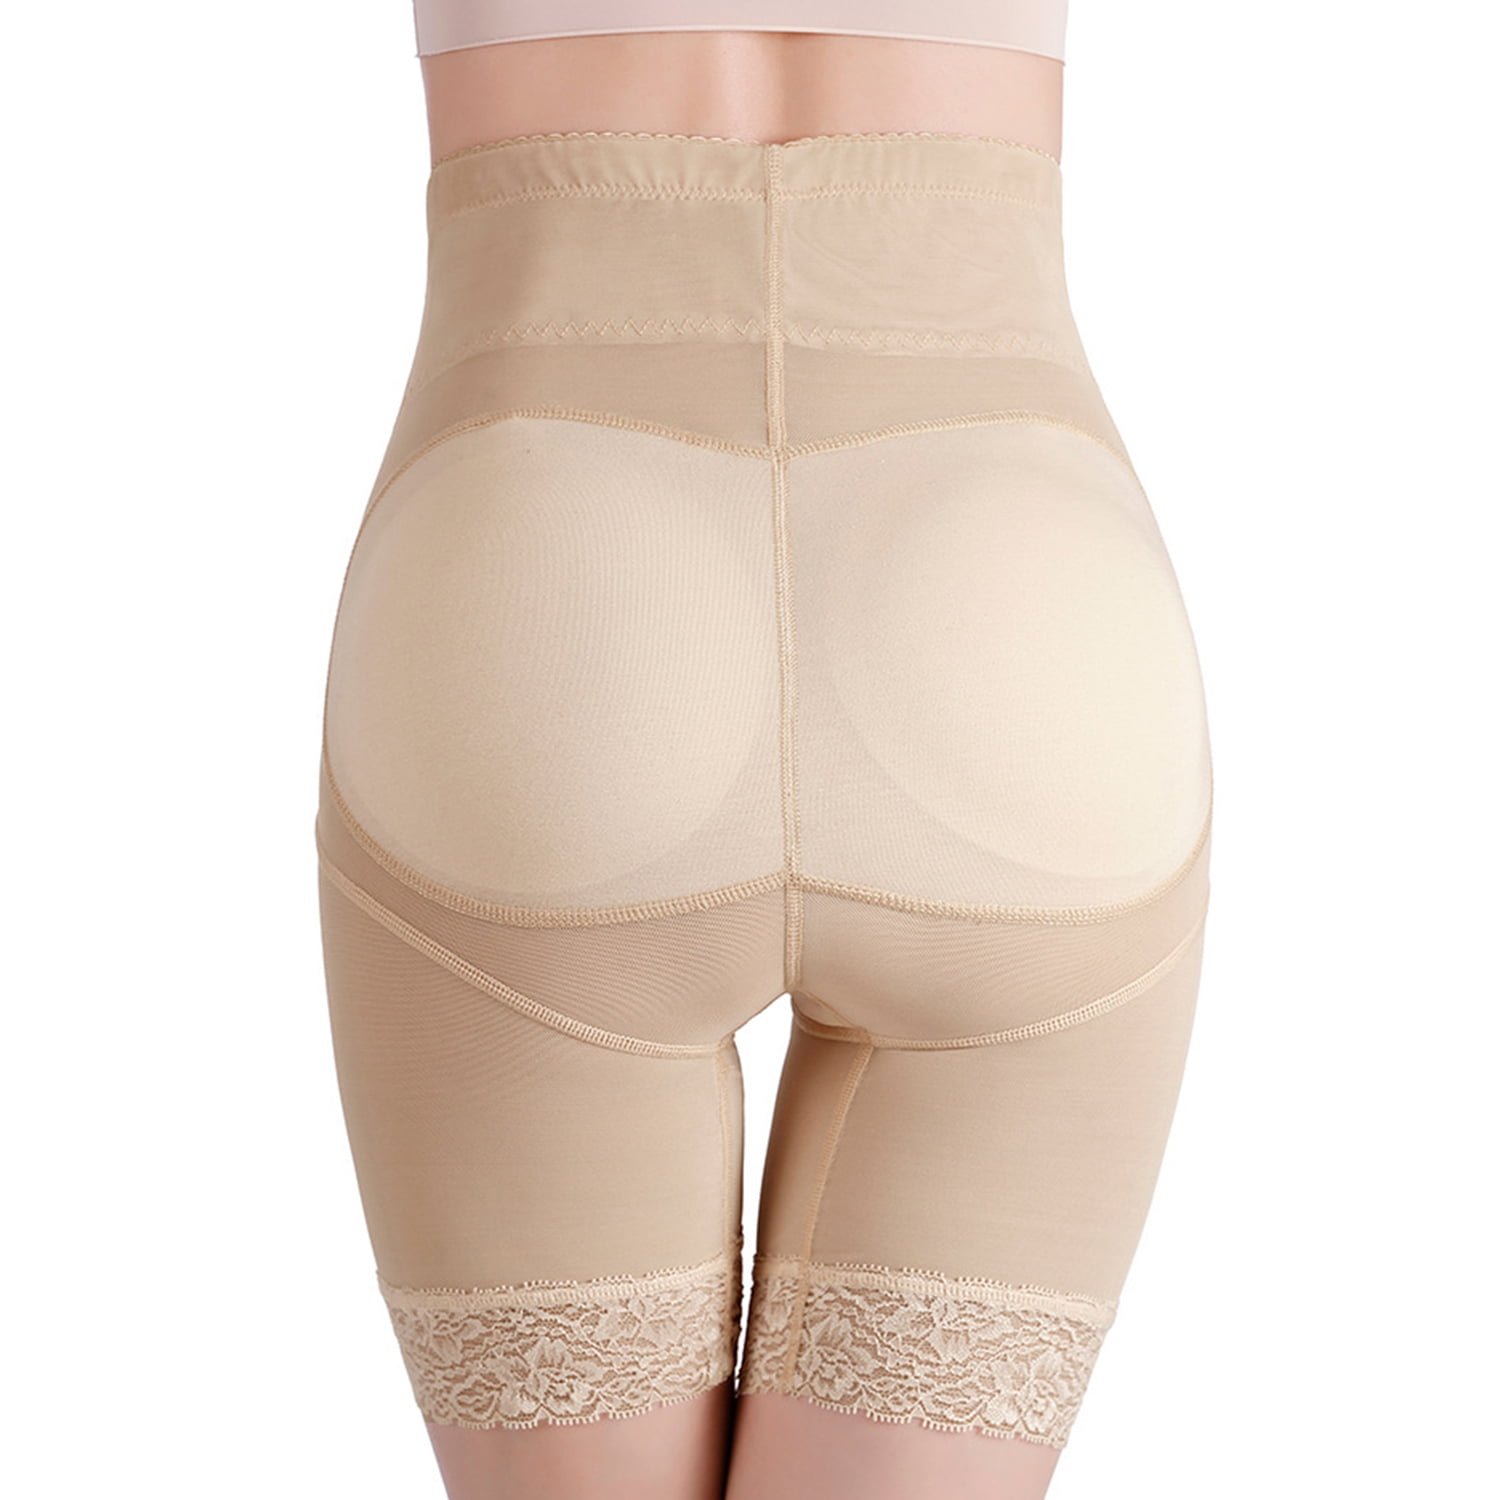 BALI Shaper Shorts Size XL #8097 Girdle High Waist Shape wear Nude Color